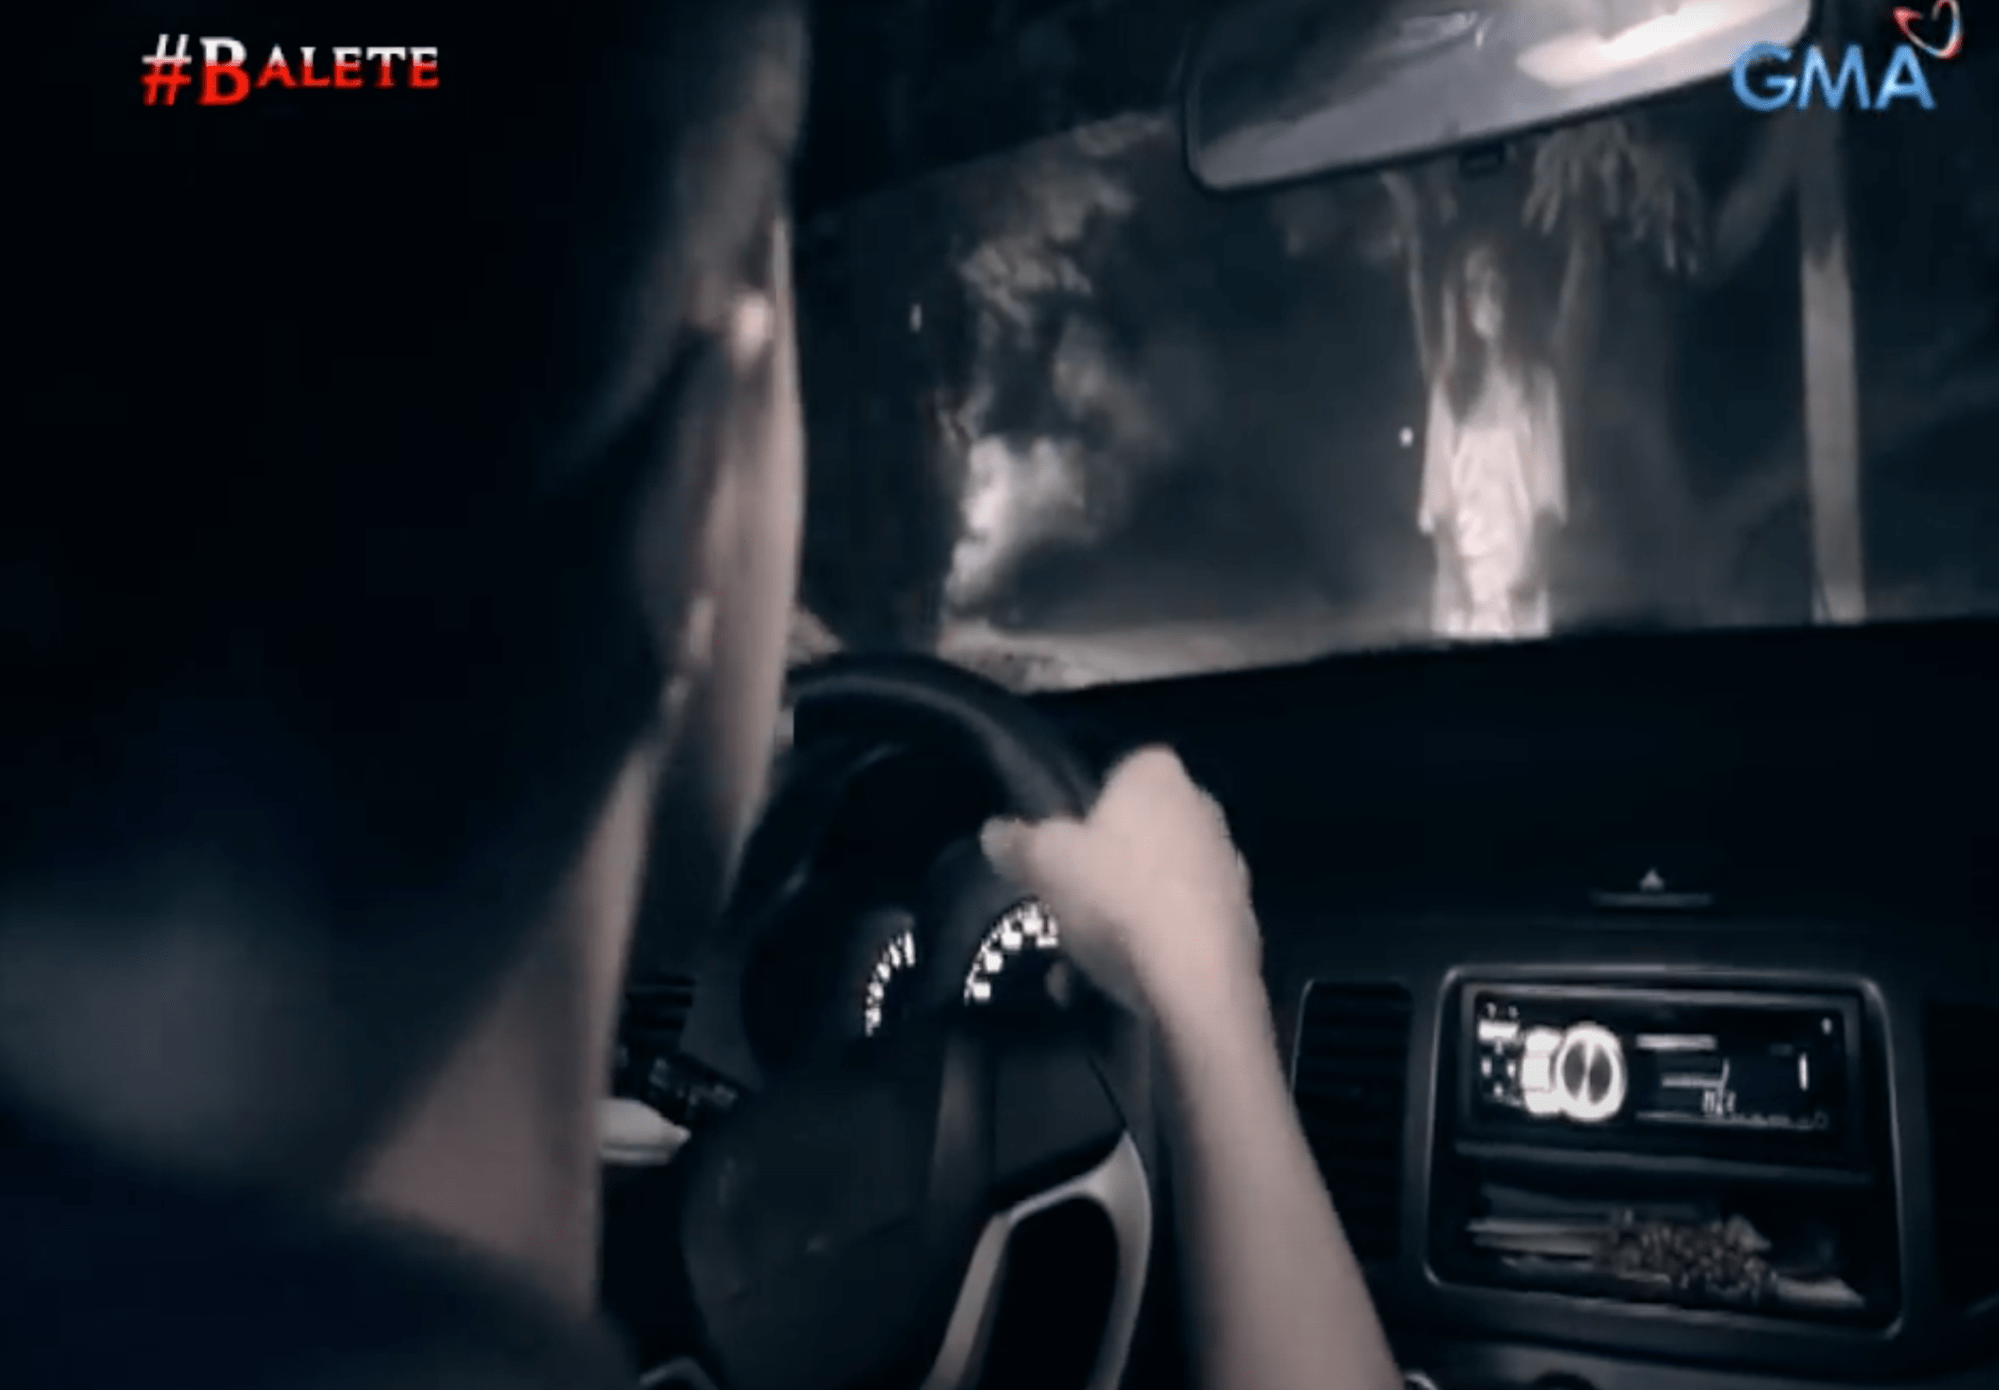 horror and crime documentaries - balete drive